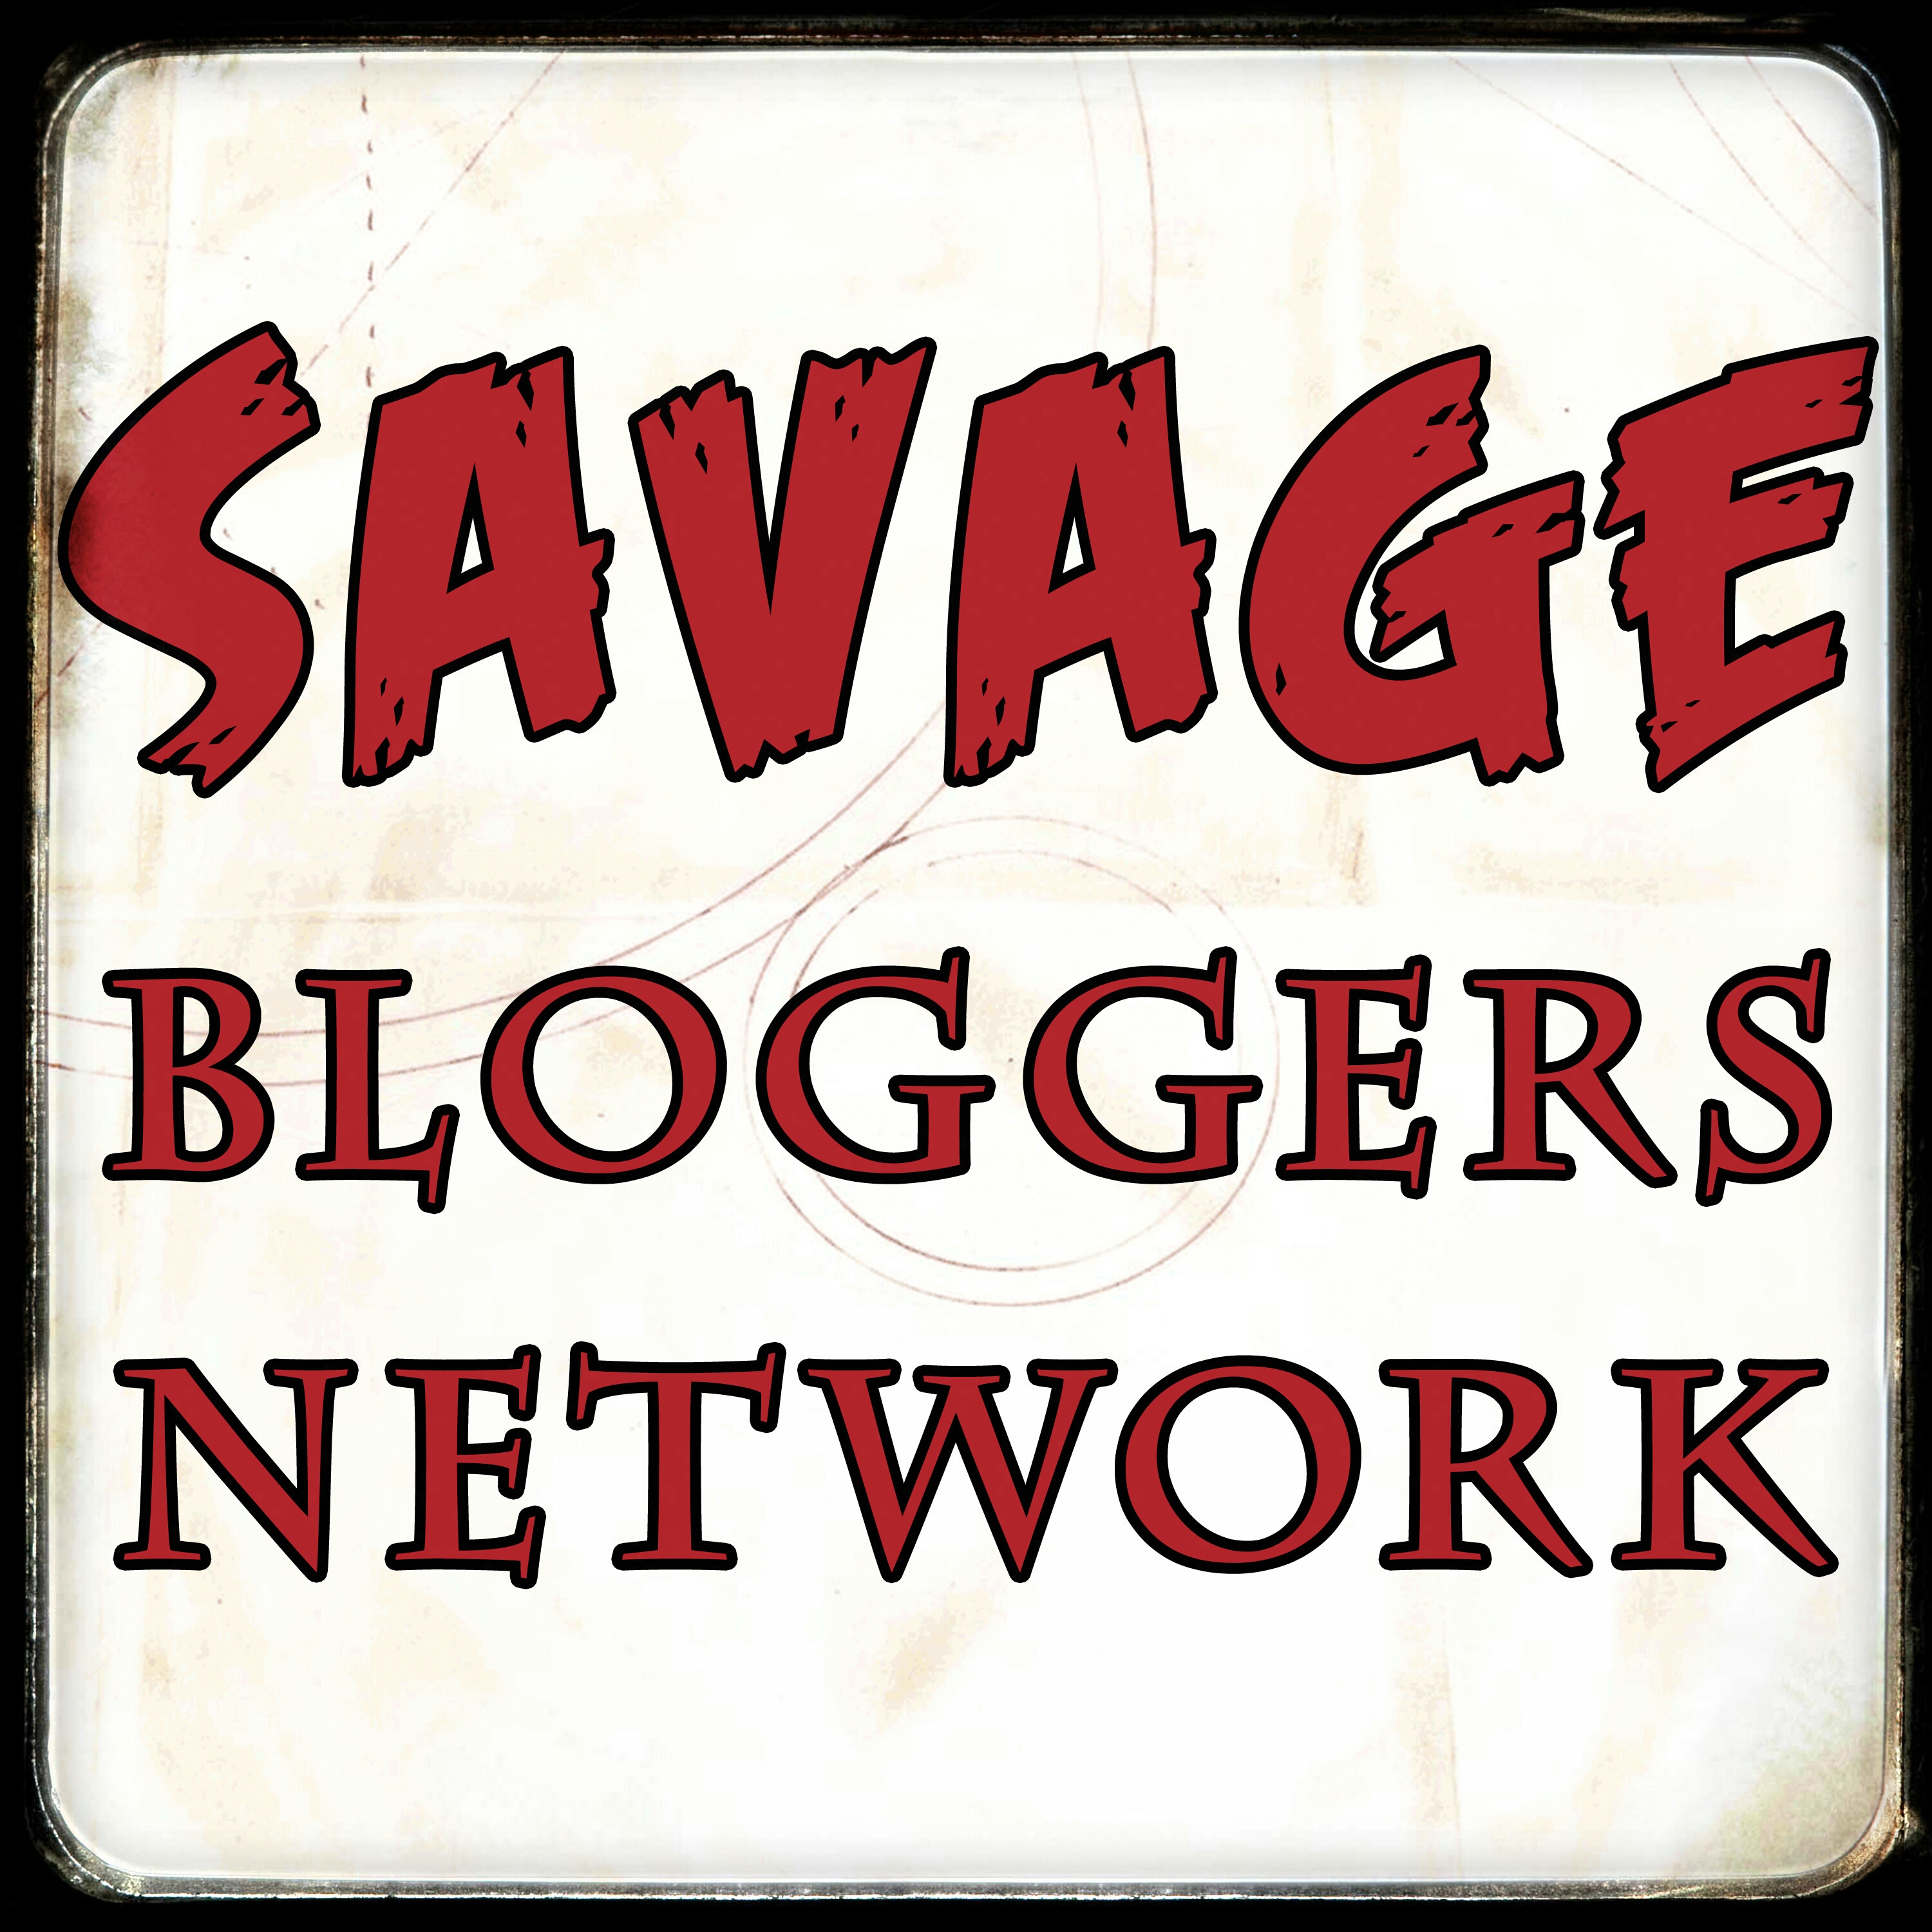 http://www.savagebloggers.net/